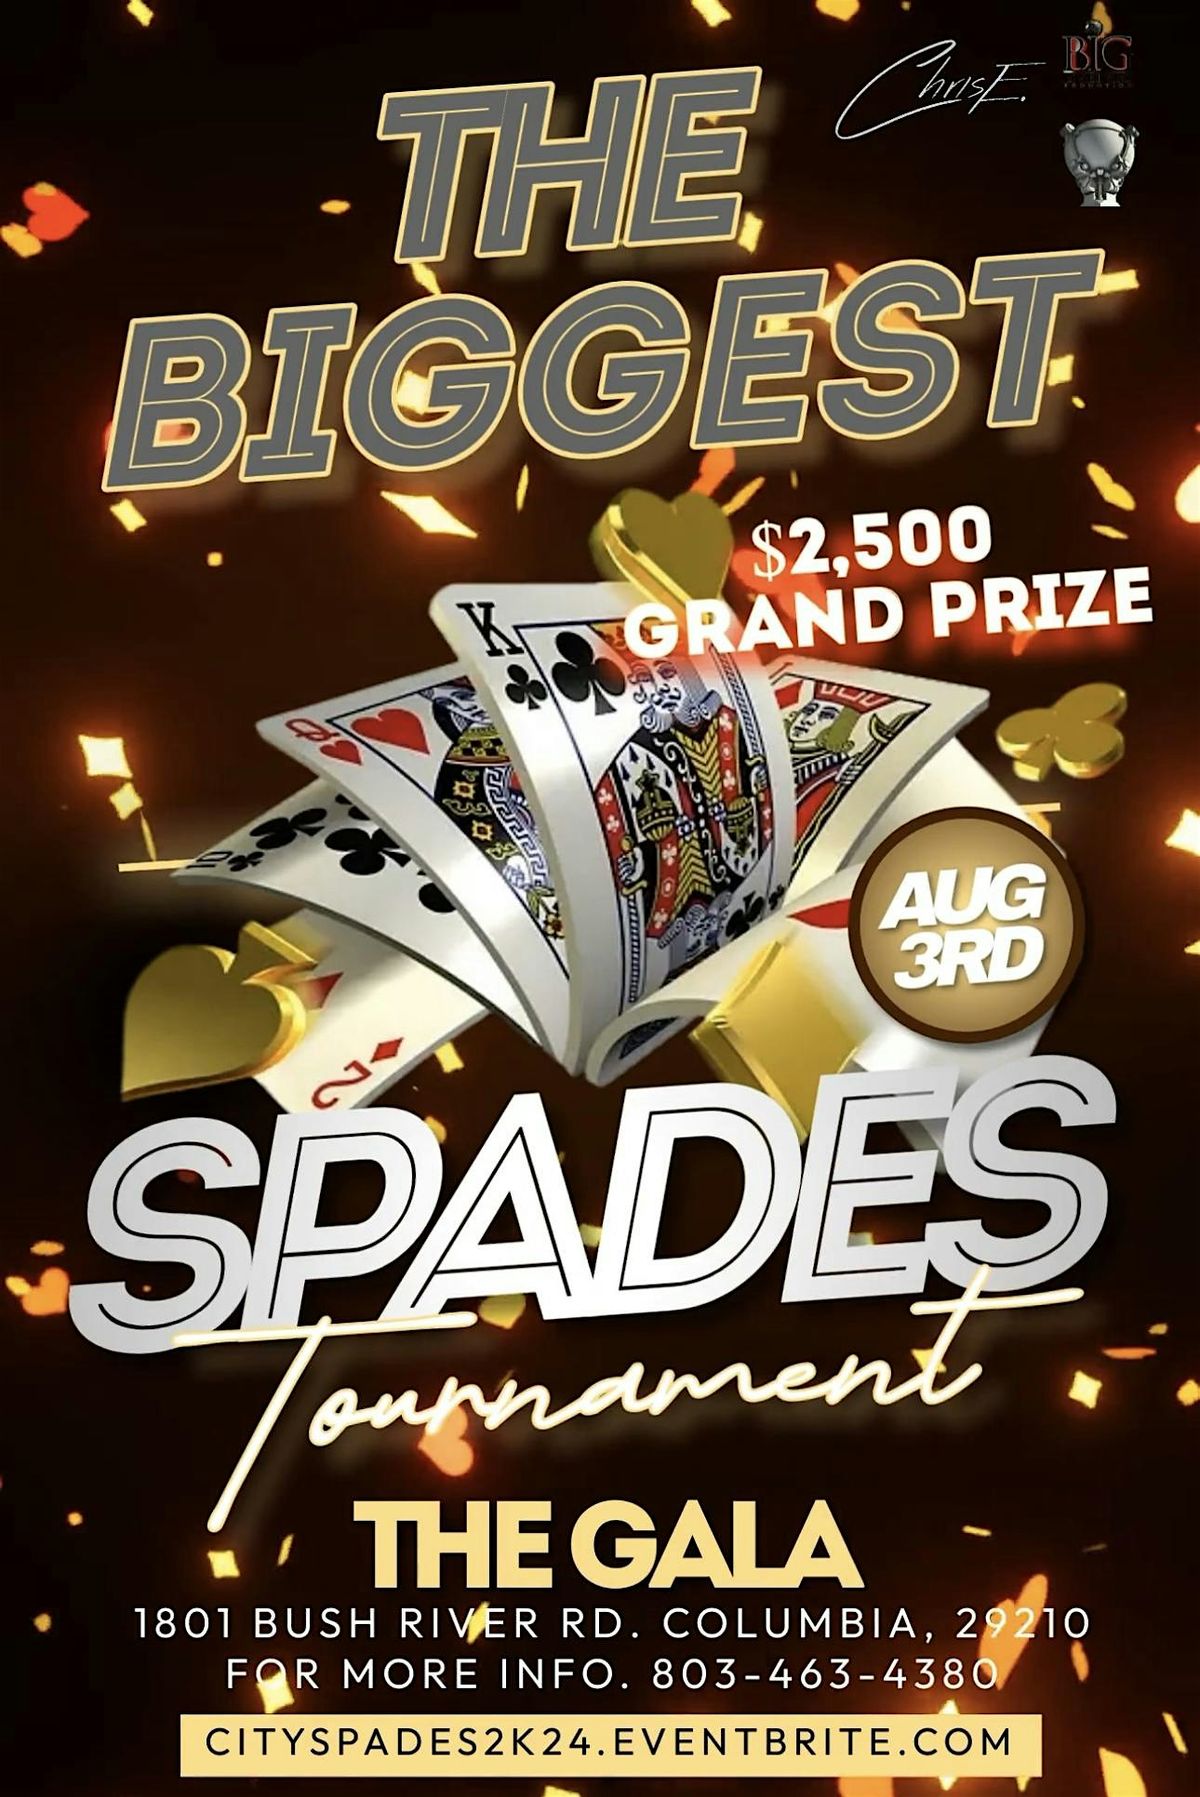 The Biggest Spade Tournament